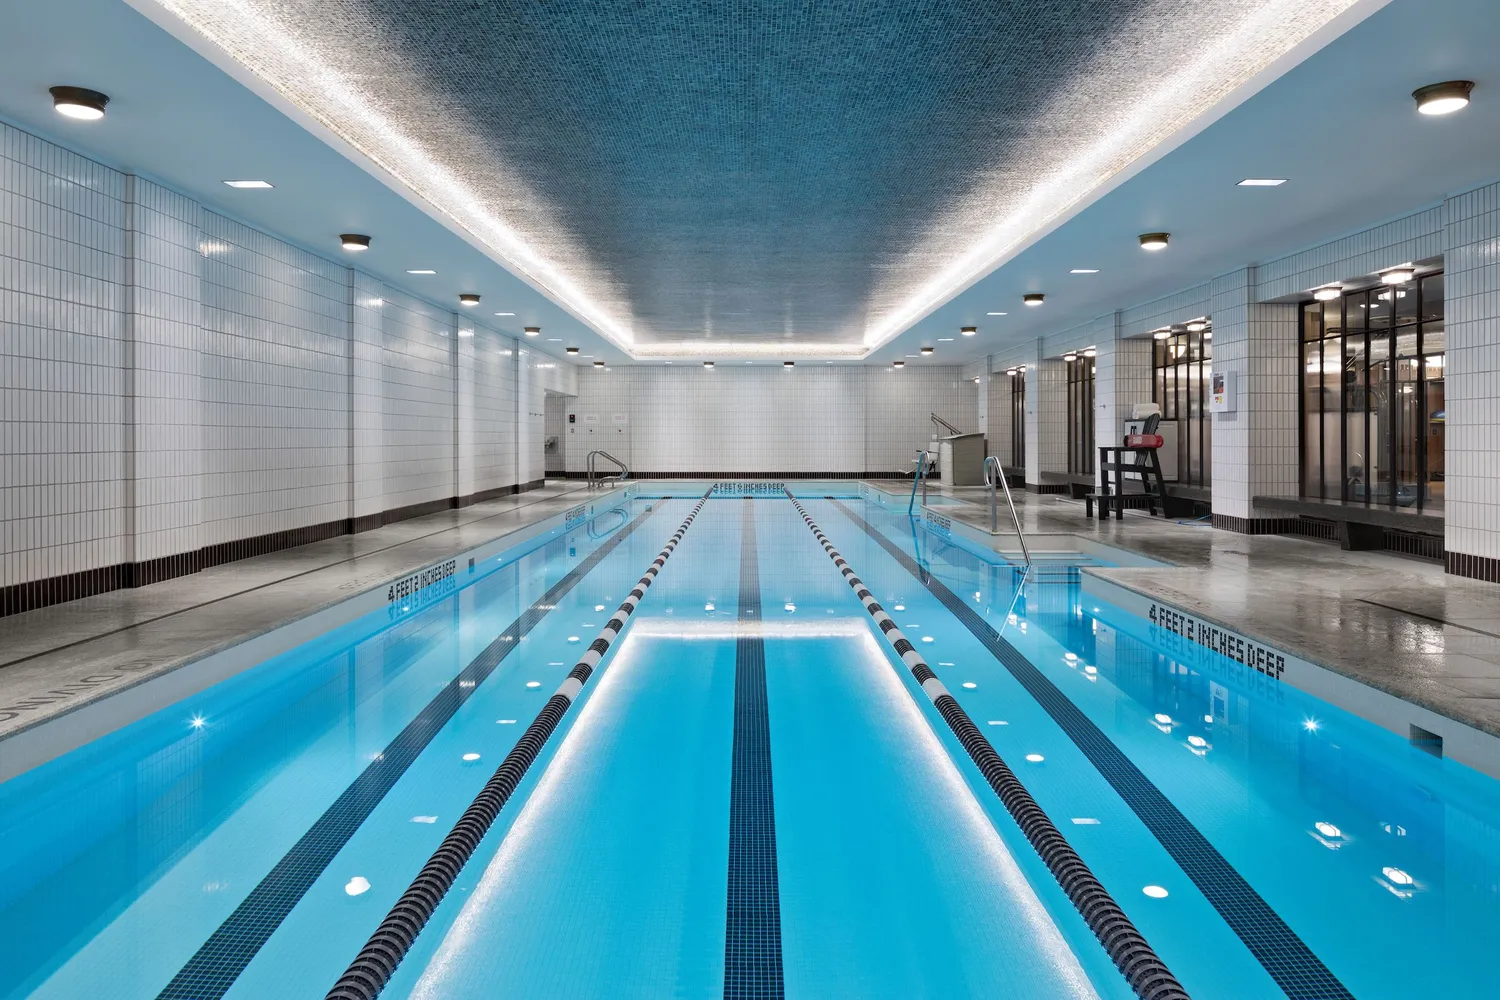 25-meter lap pool with adjacent hot tub